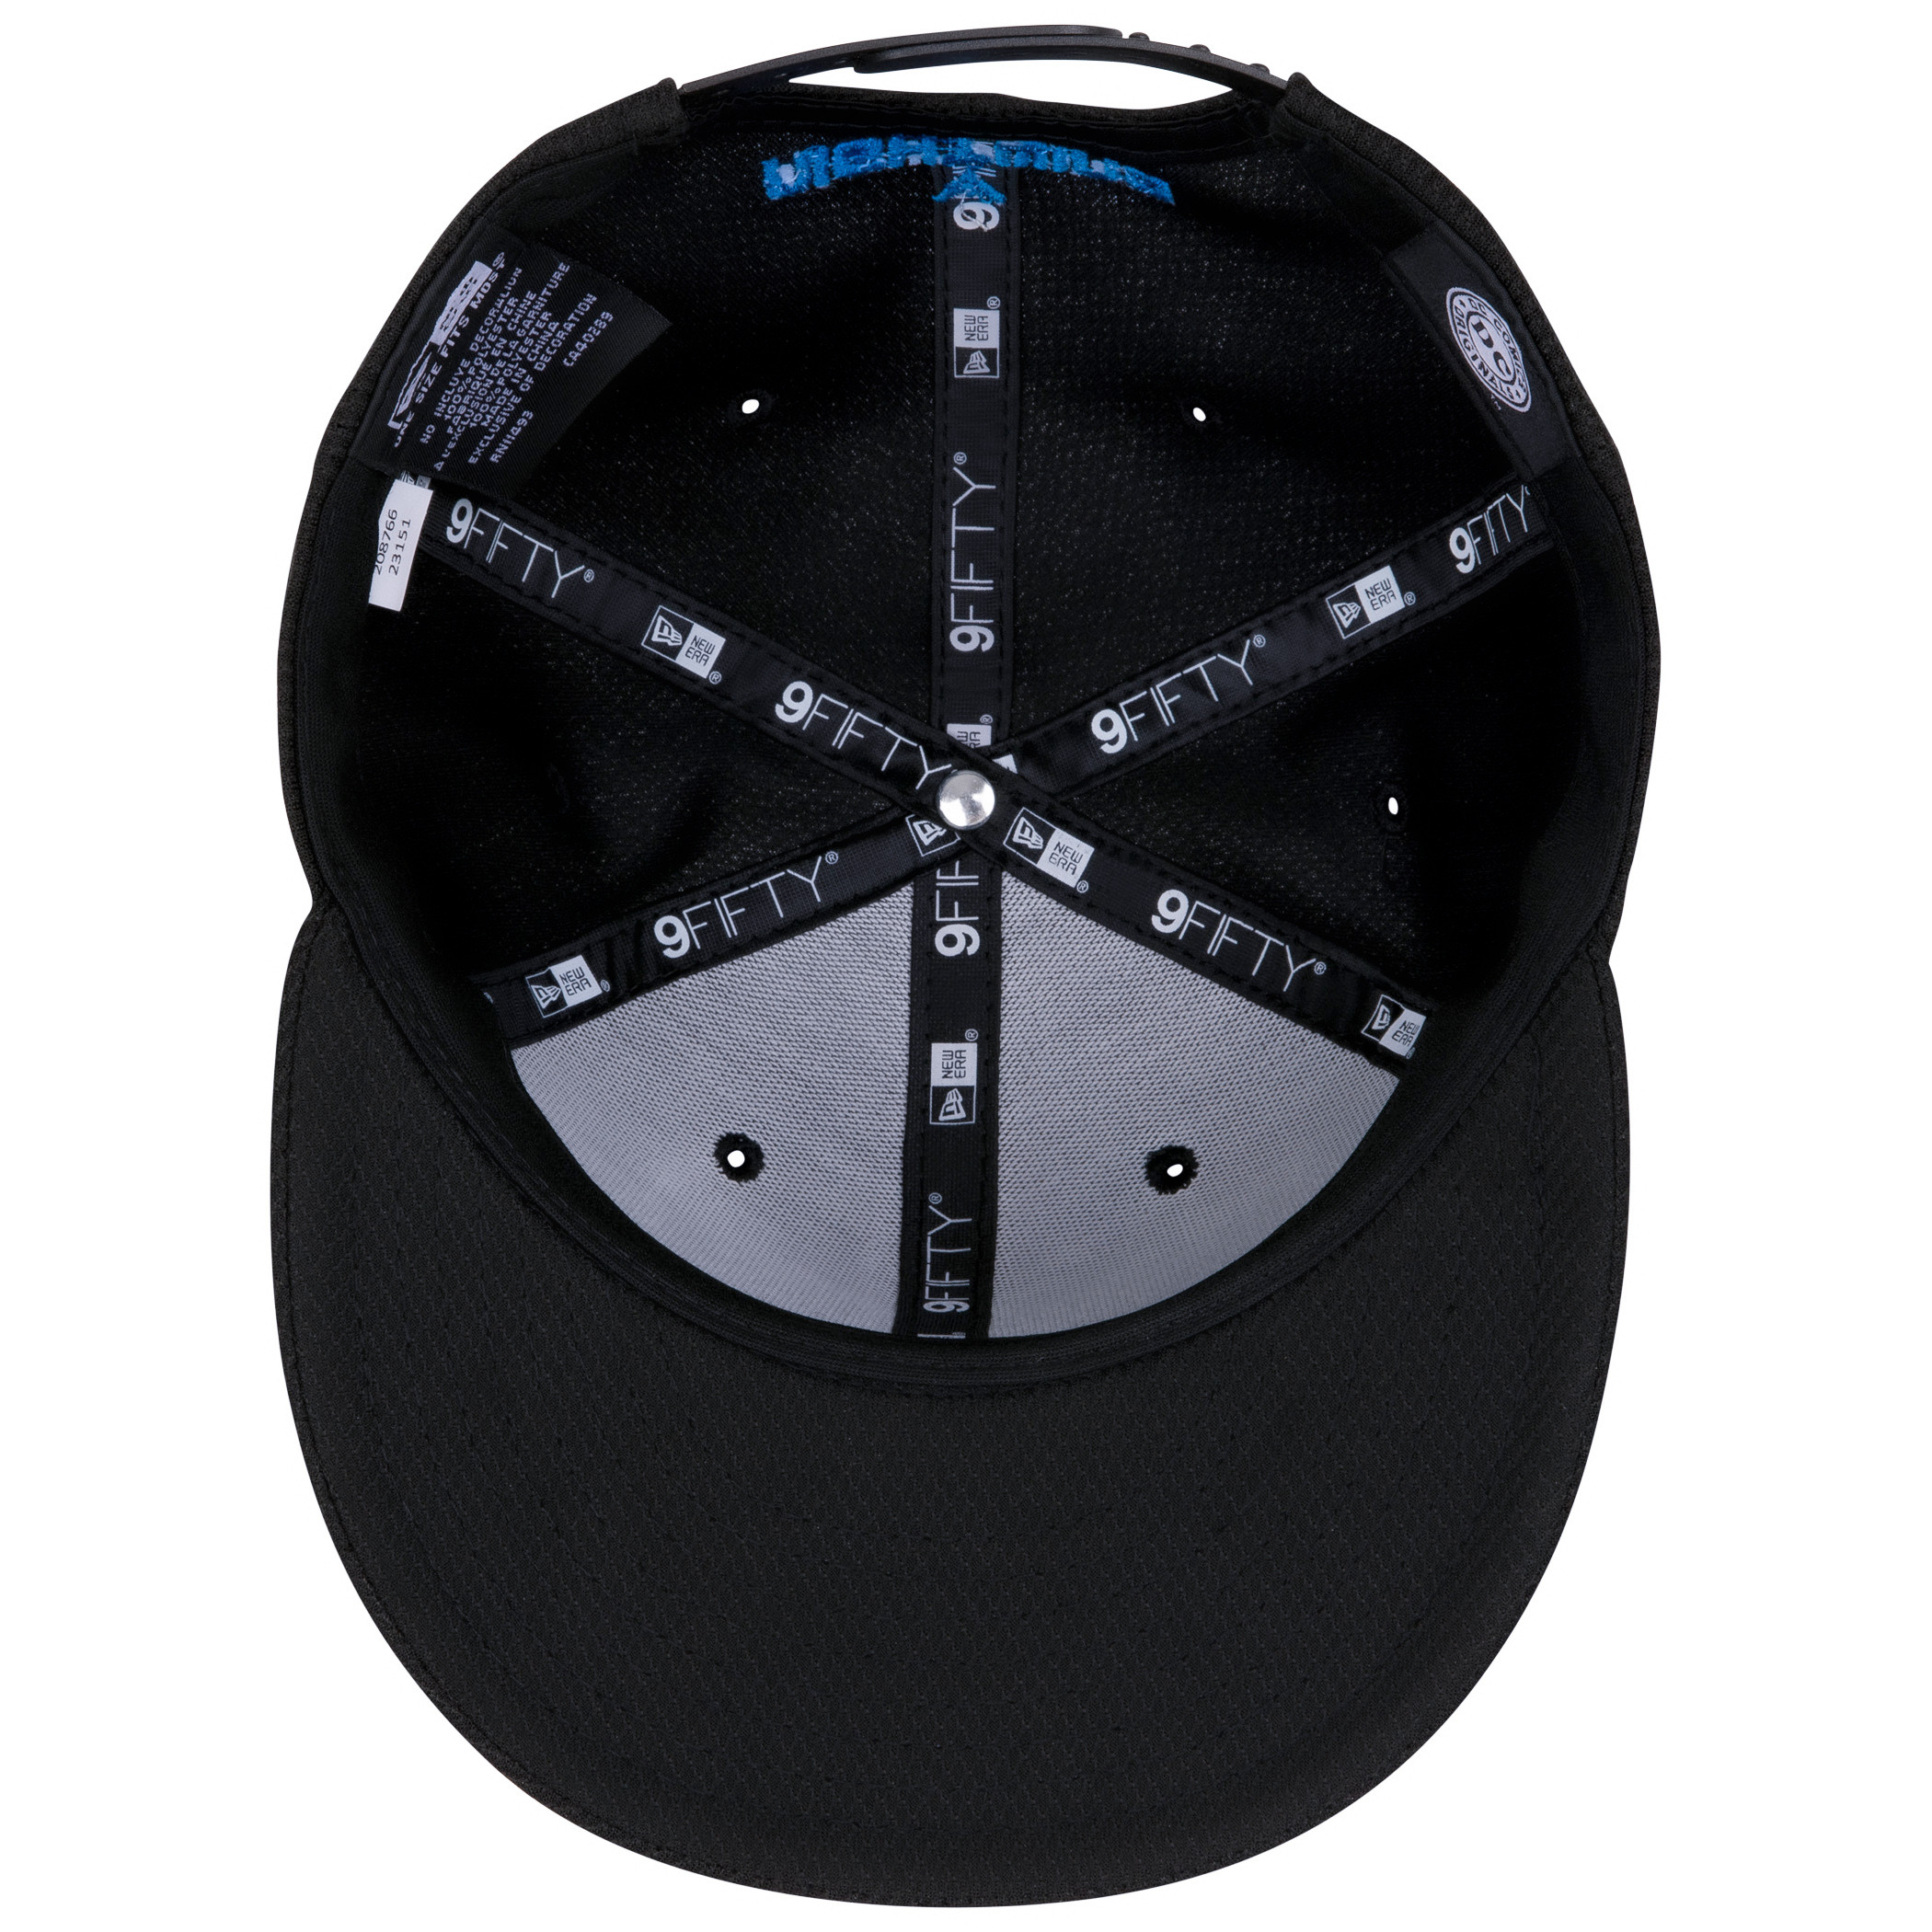 Nightwing Symbol New Era 9Fifty Adjustable Snapback Hat